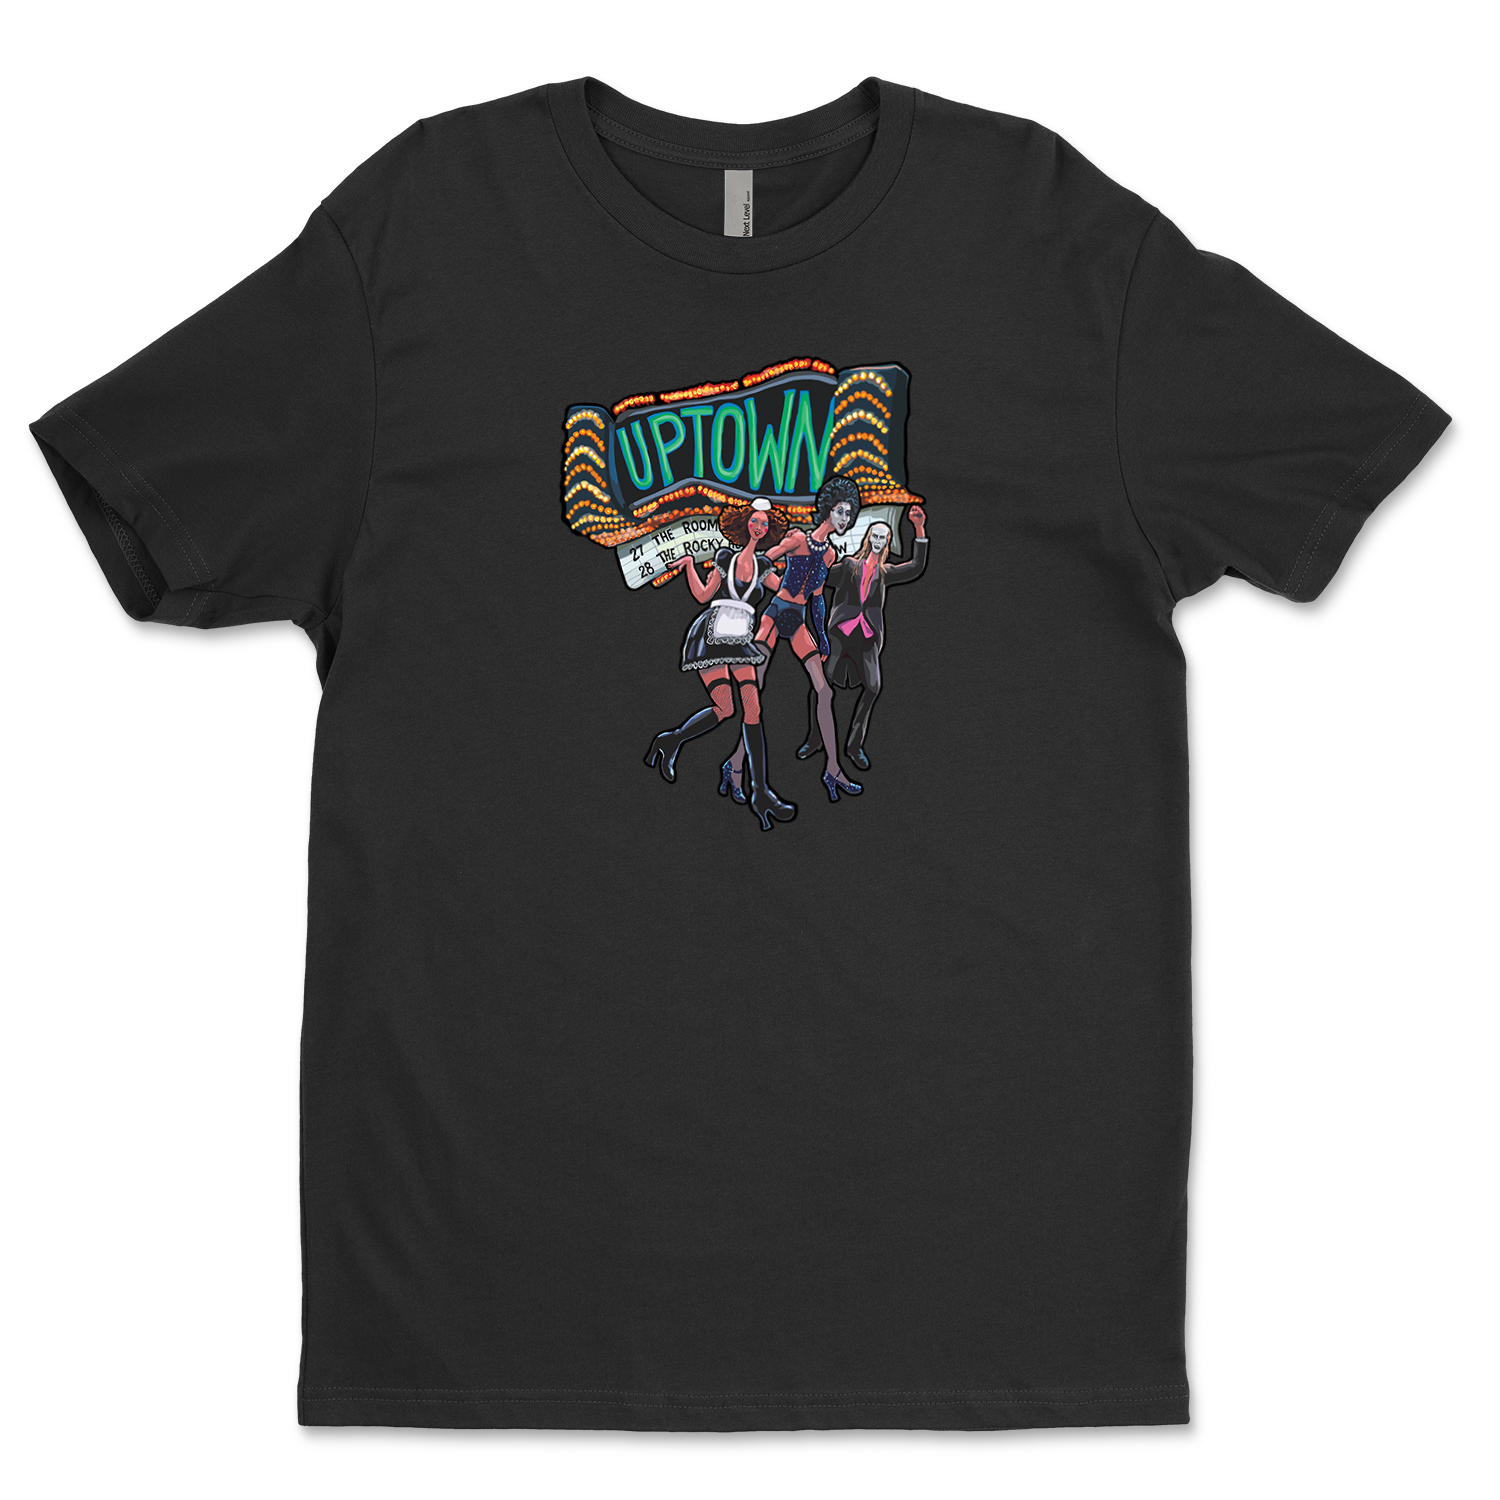 Uptown Theater - Rocky Horror unisex T-Shirt Medium / Black